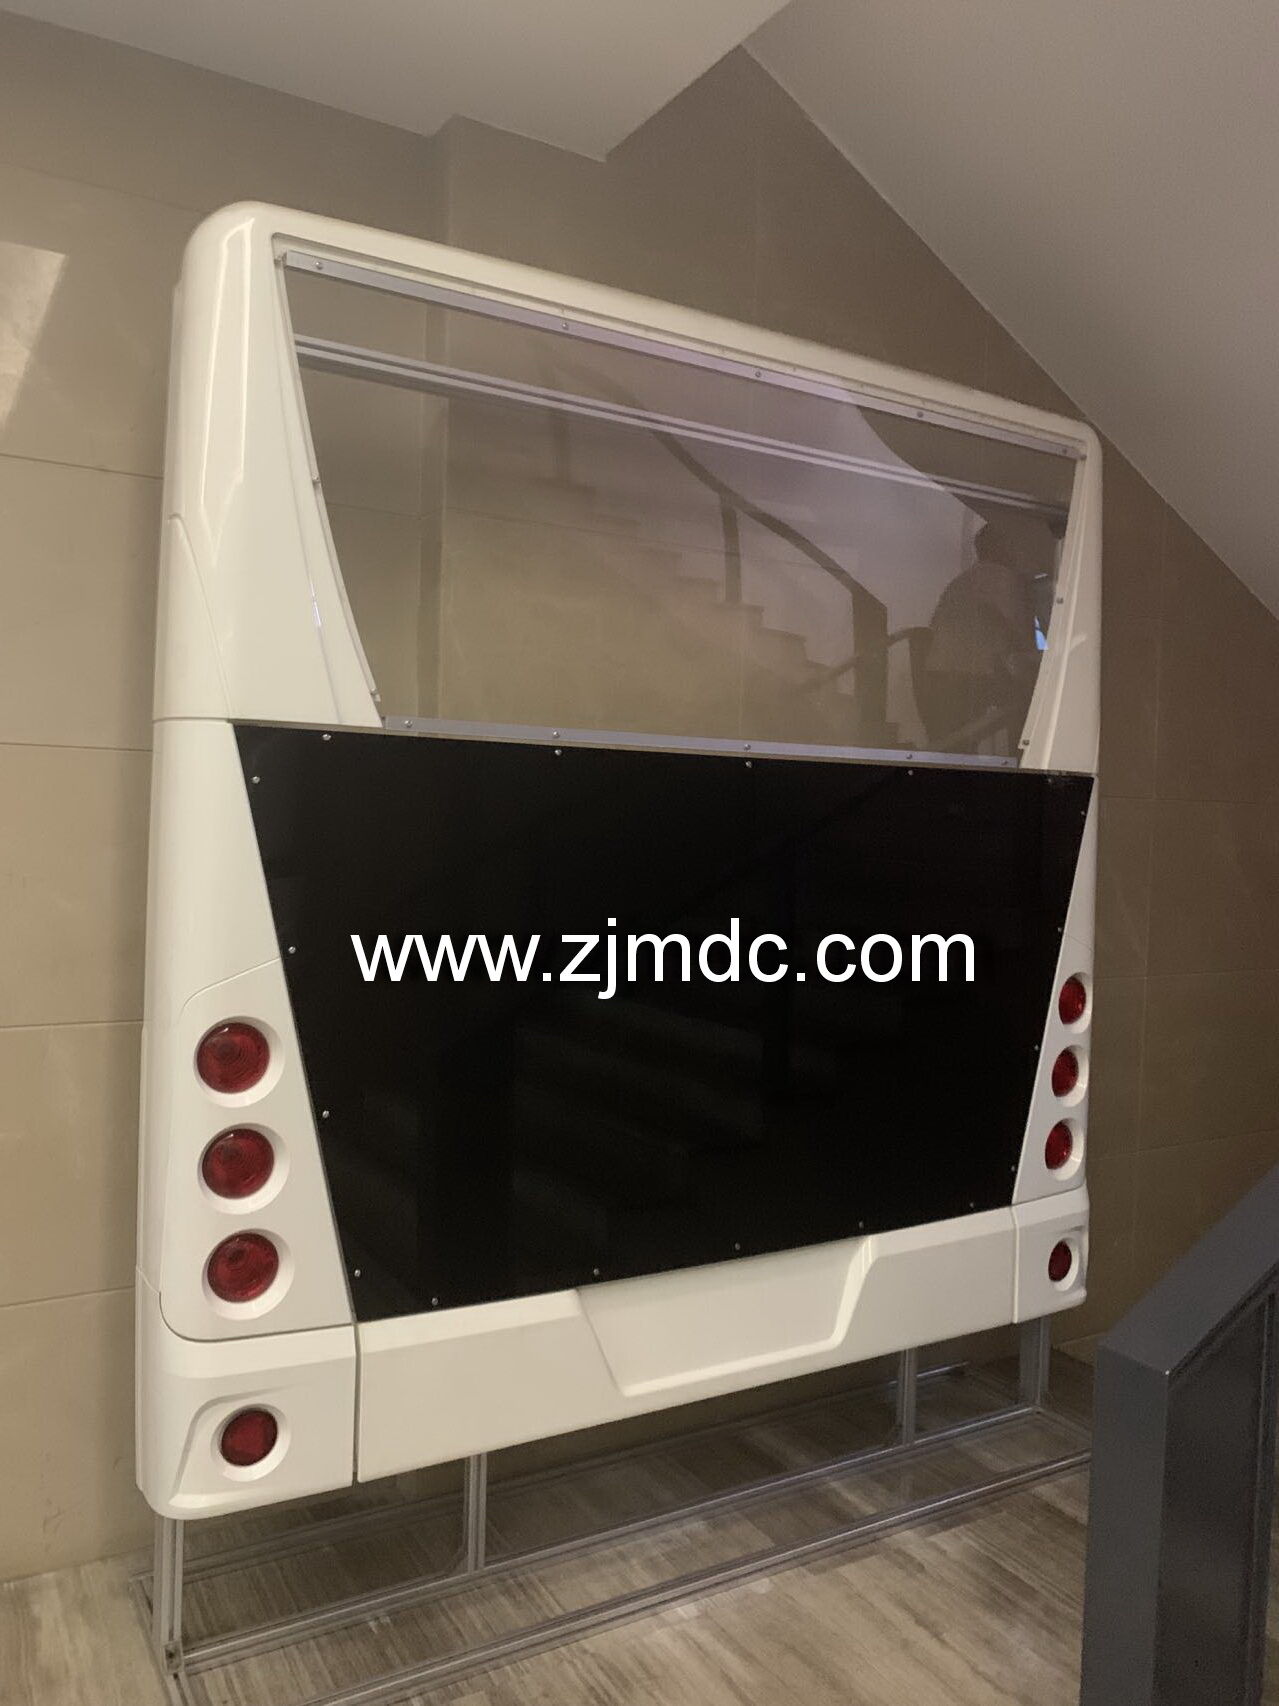 SMC bus back panel mold